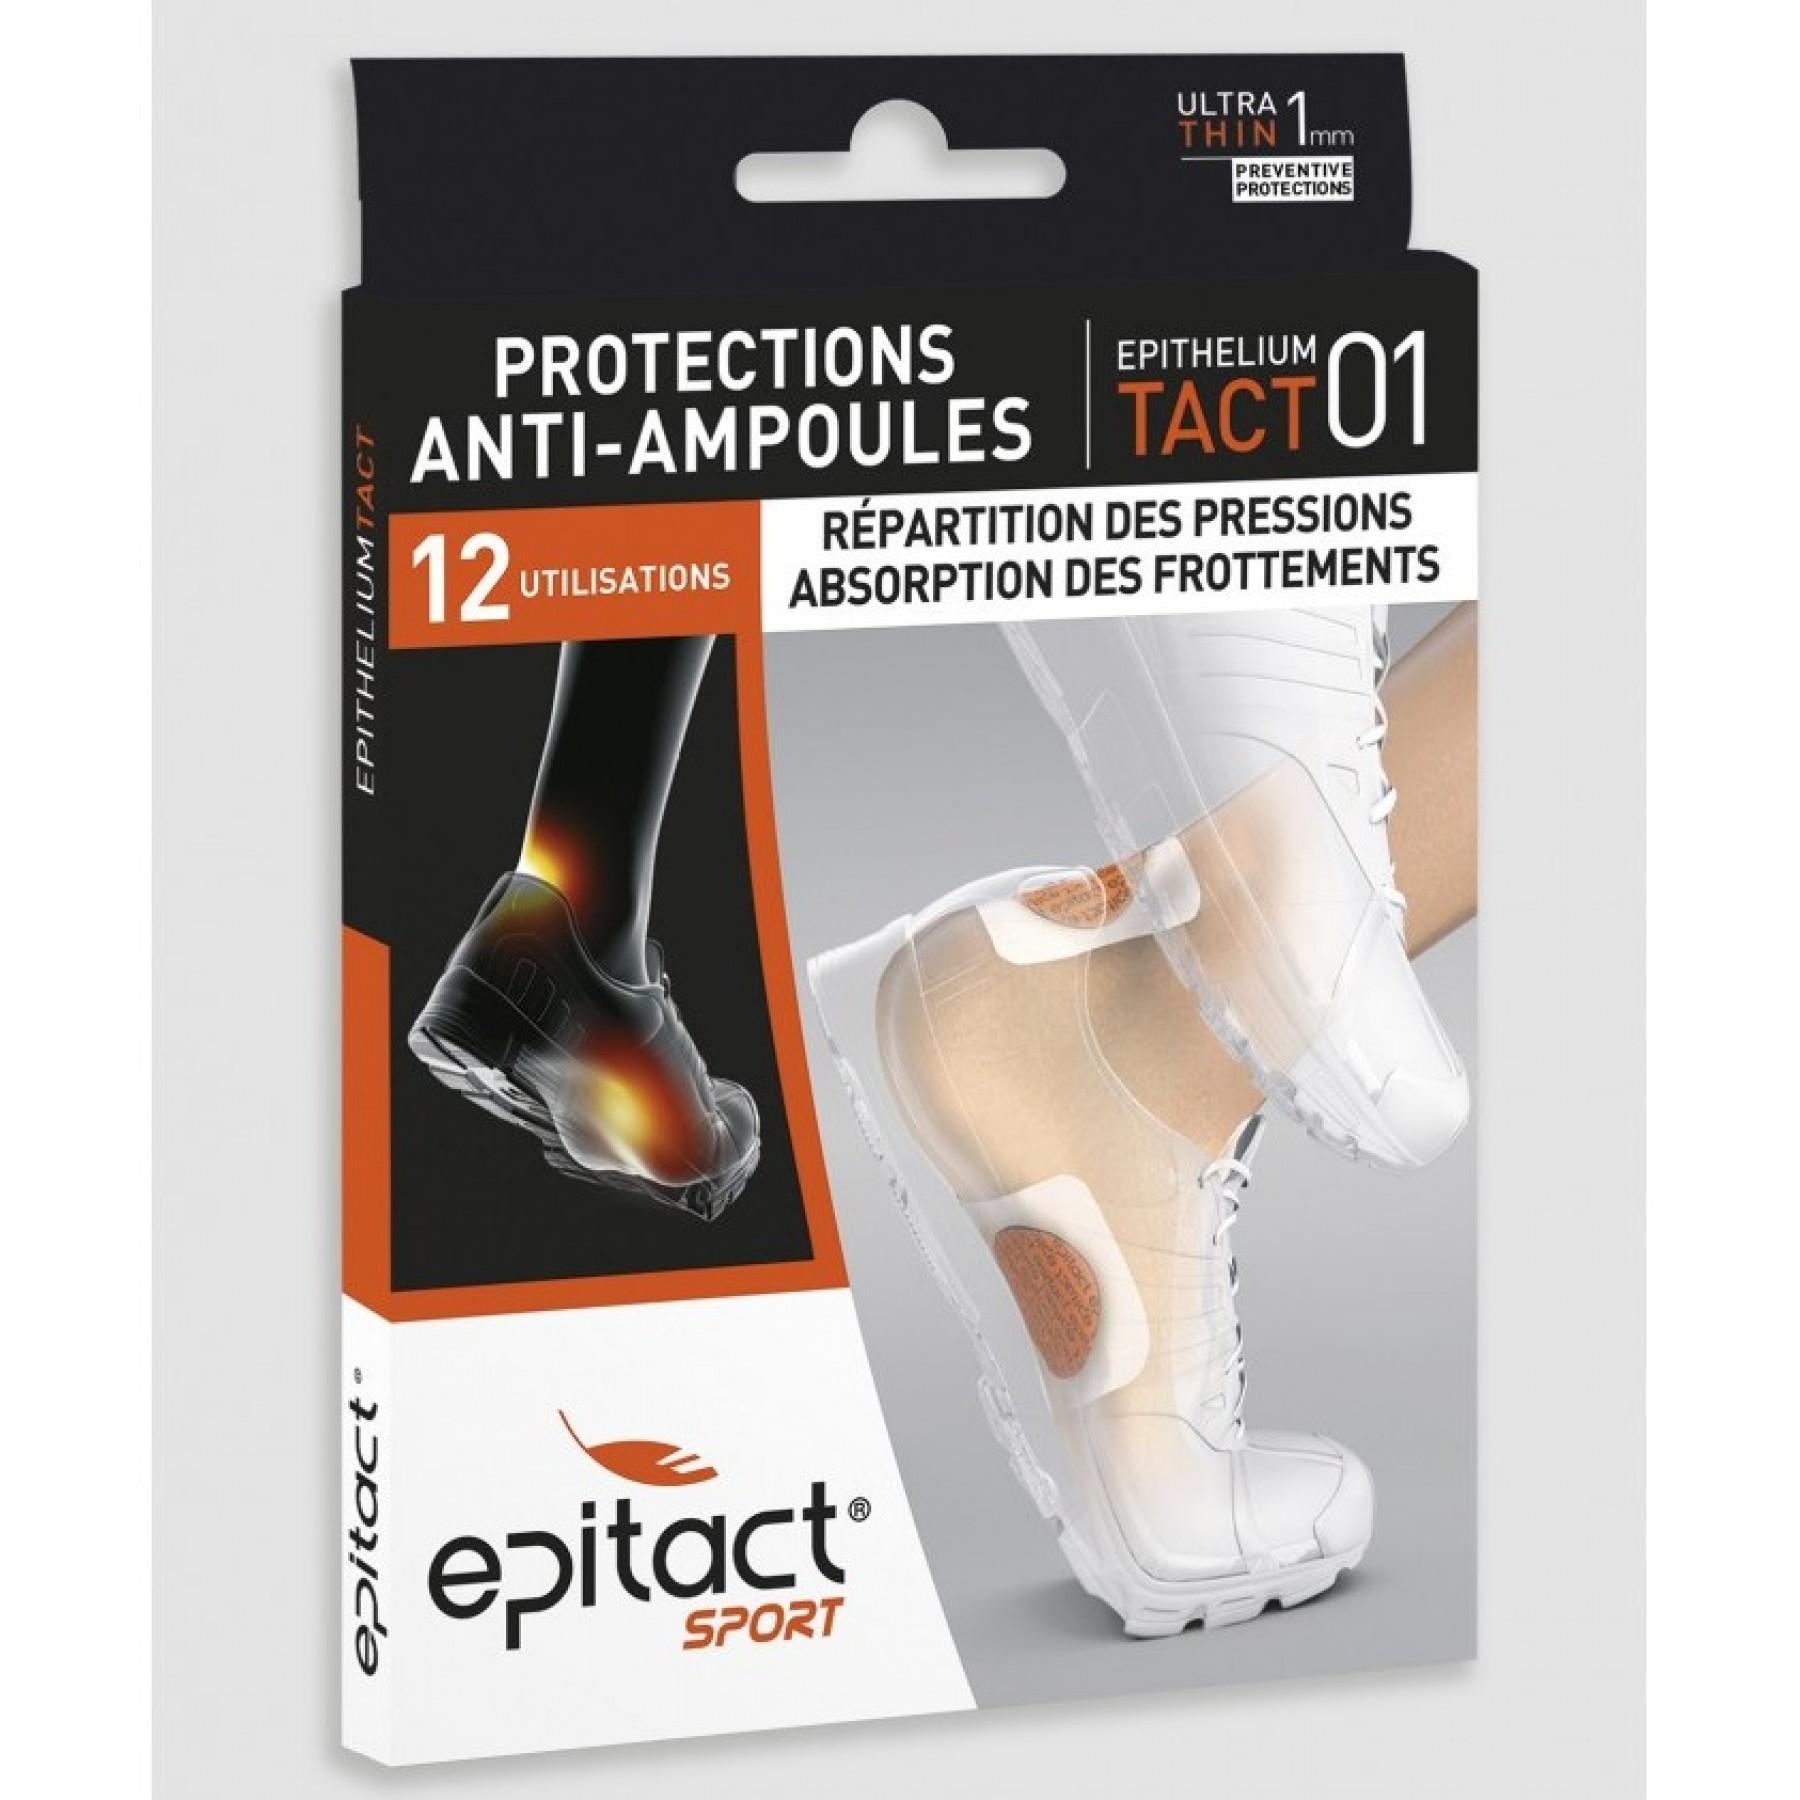 Protections anti-ampoules Epitact EPITHELIUMTACT 01 (lot de 4 protections + 12 adhésifs)